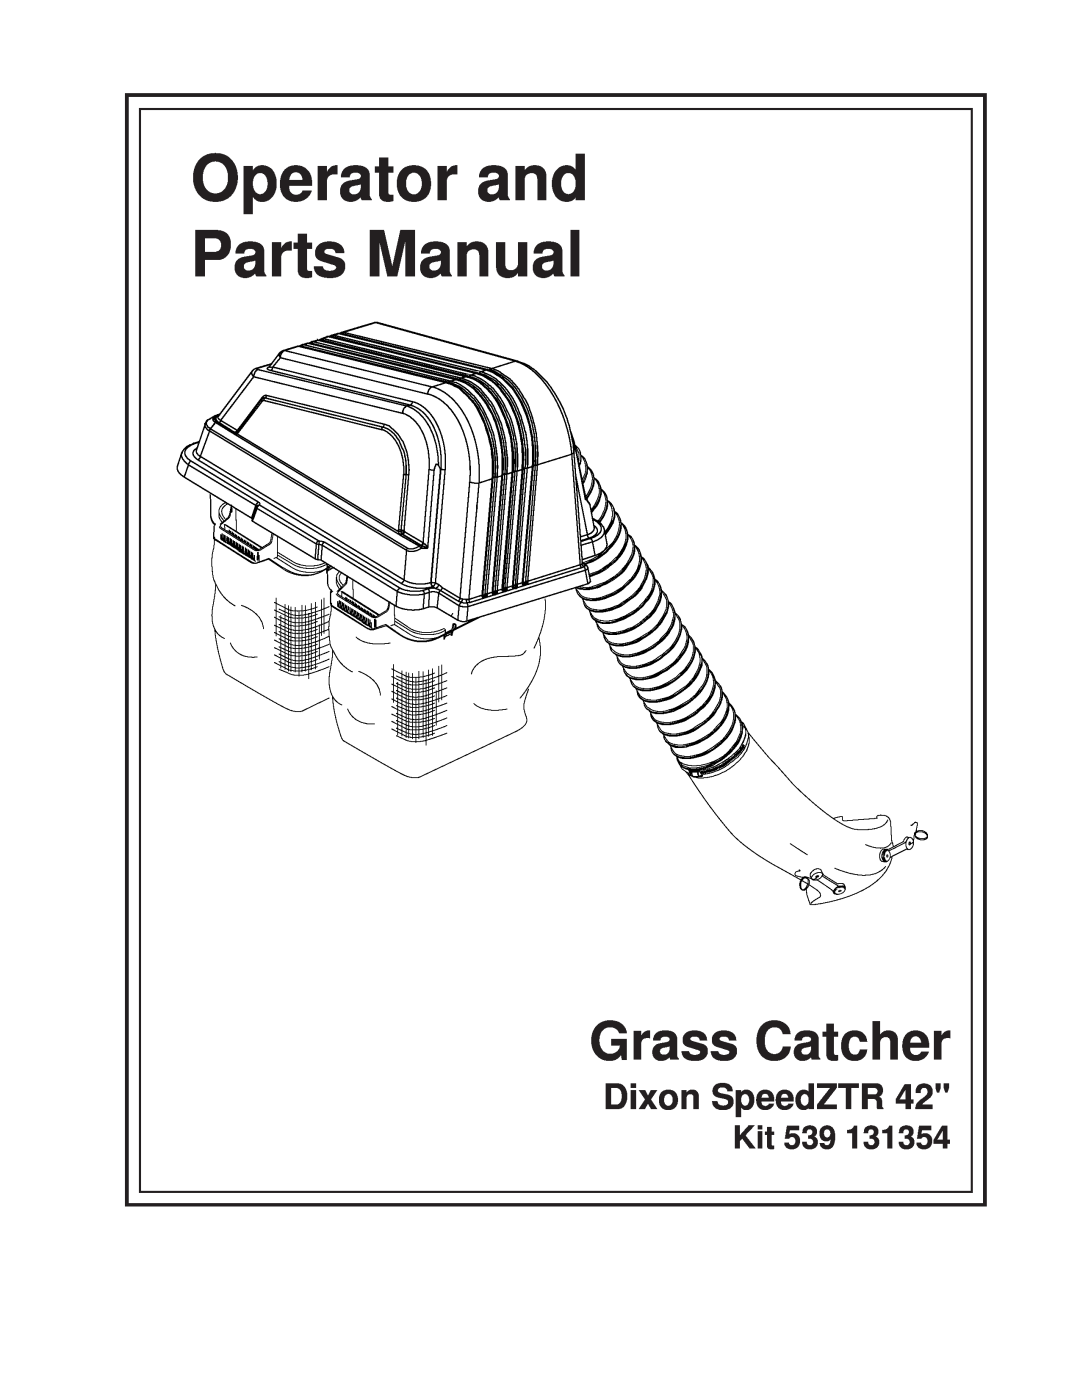 Dixon 539 131388, 539 131354 manual Kit, Operator and Parts Manual, Grass Catcher, Dixon SpeedZTR 